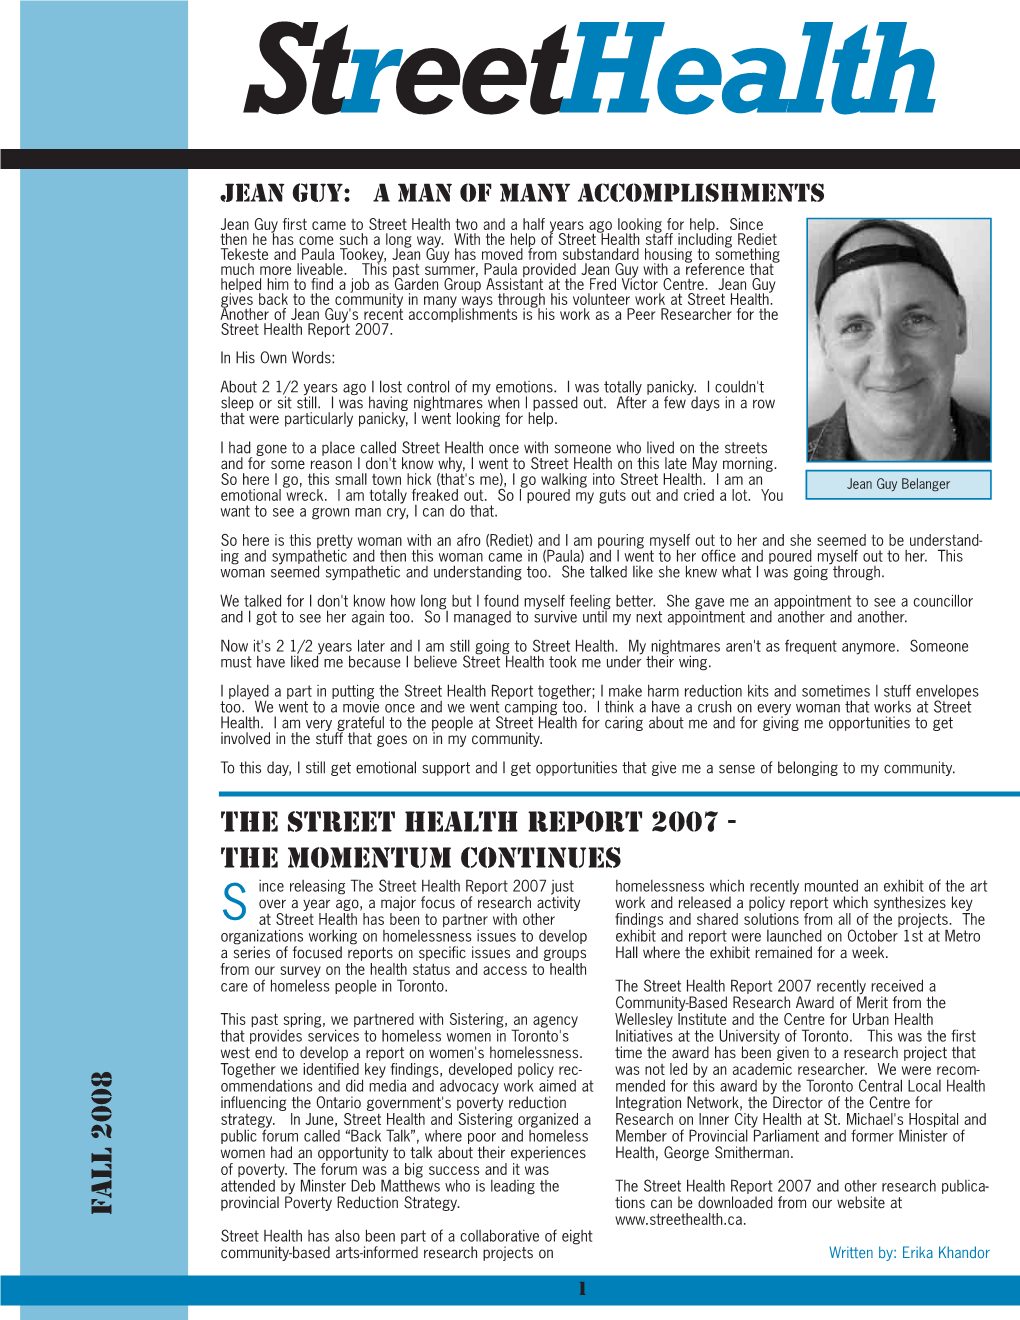 The Street Health Report 2007